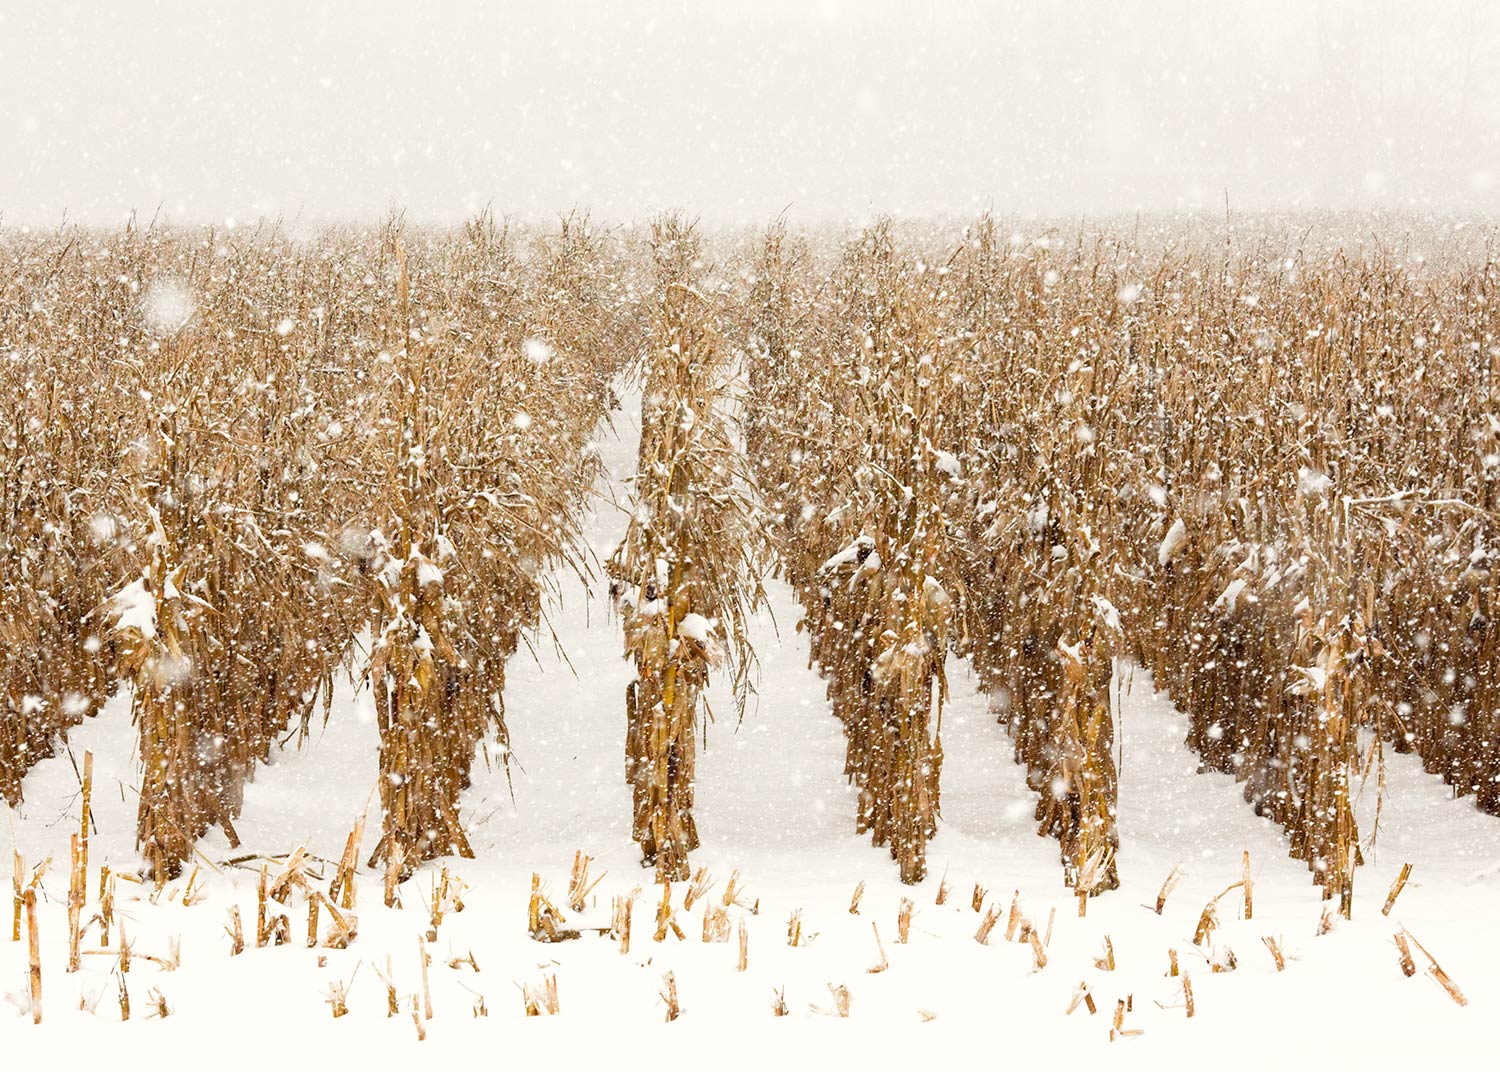 Snowy Corn Stalks